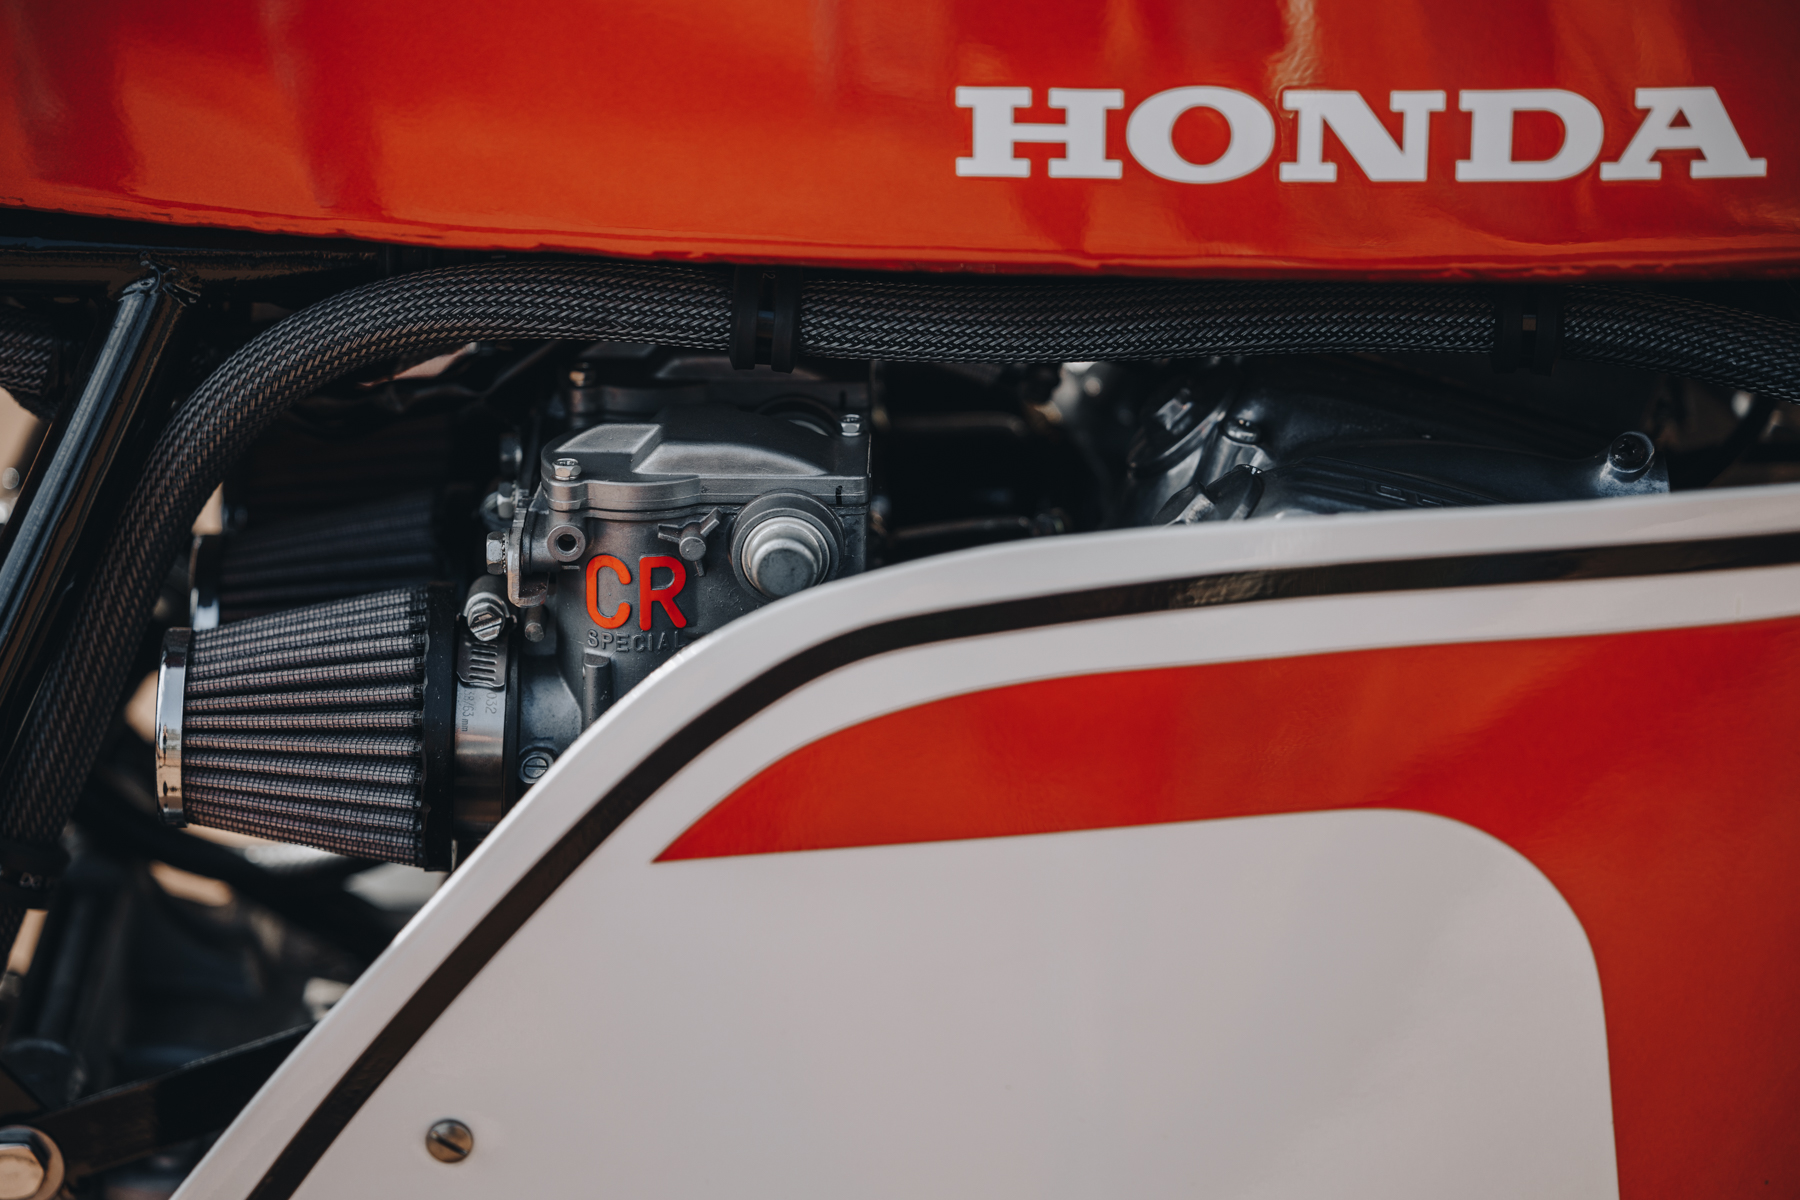 Detail photo of a Honda CB750 with Keihin CR carburettors